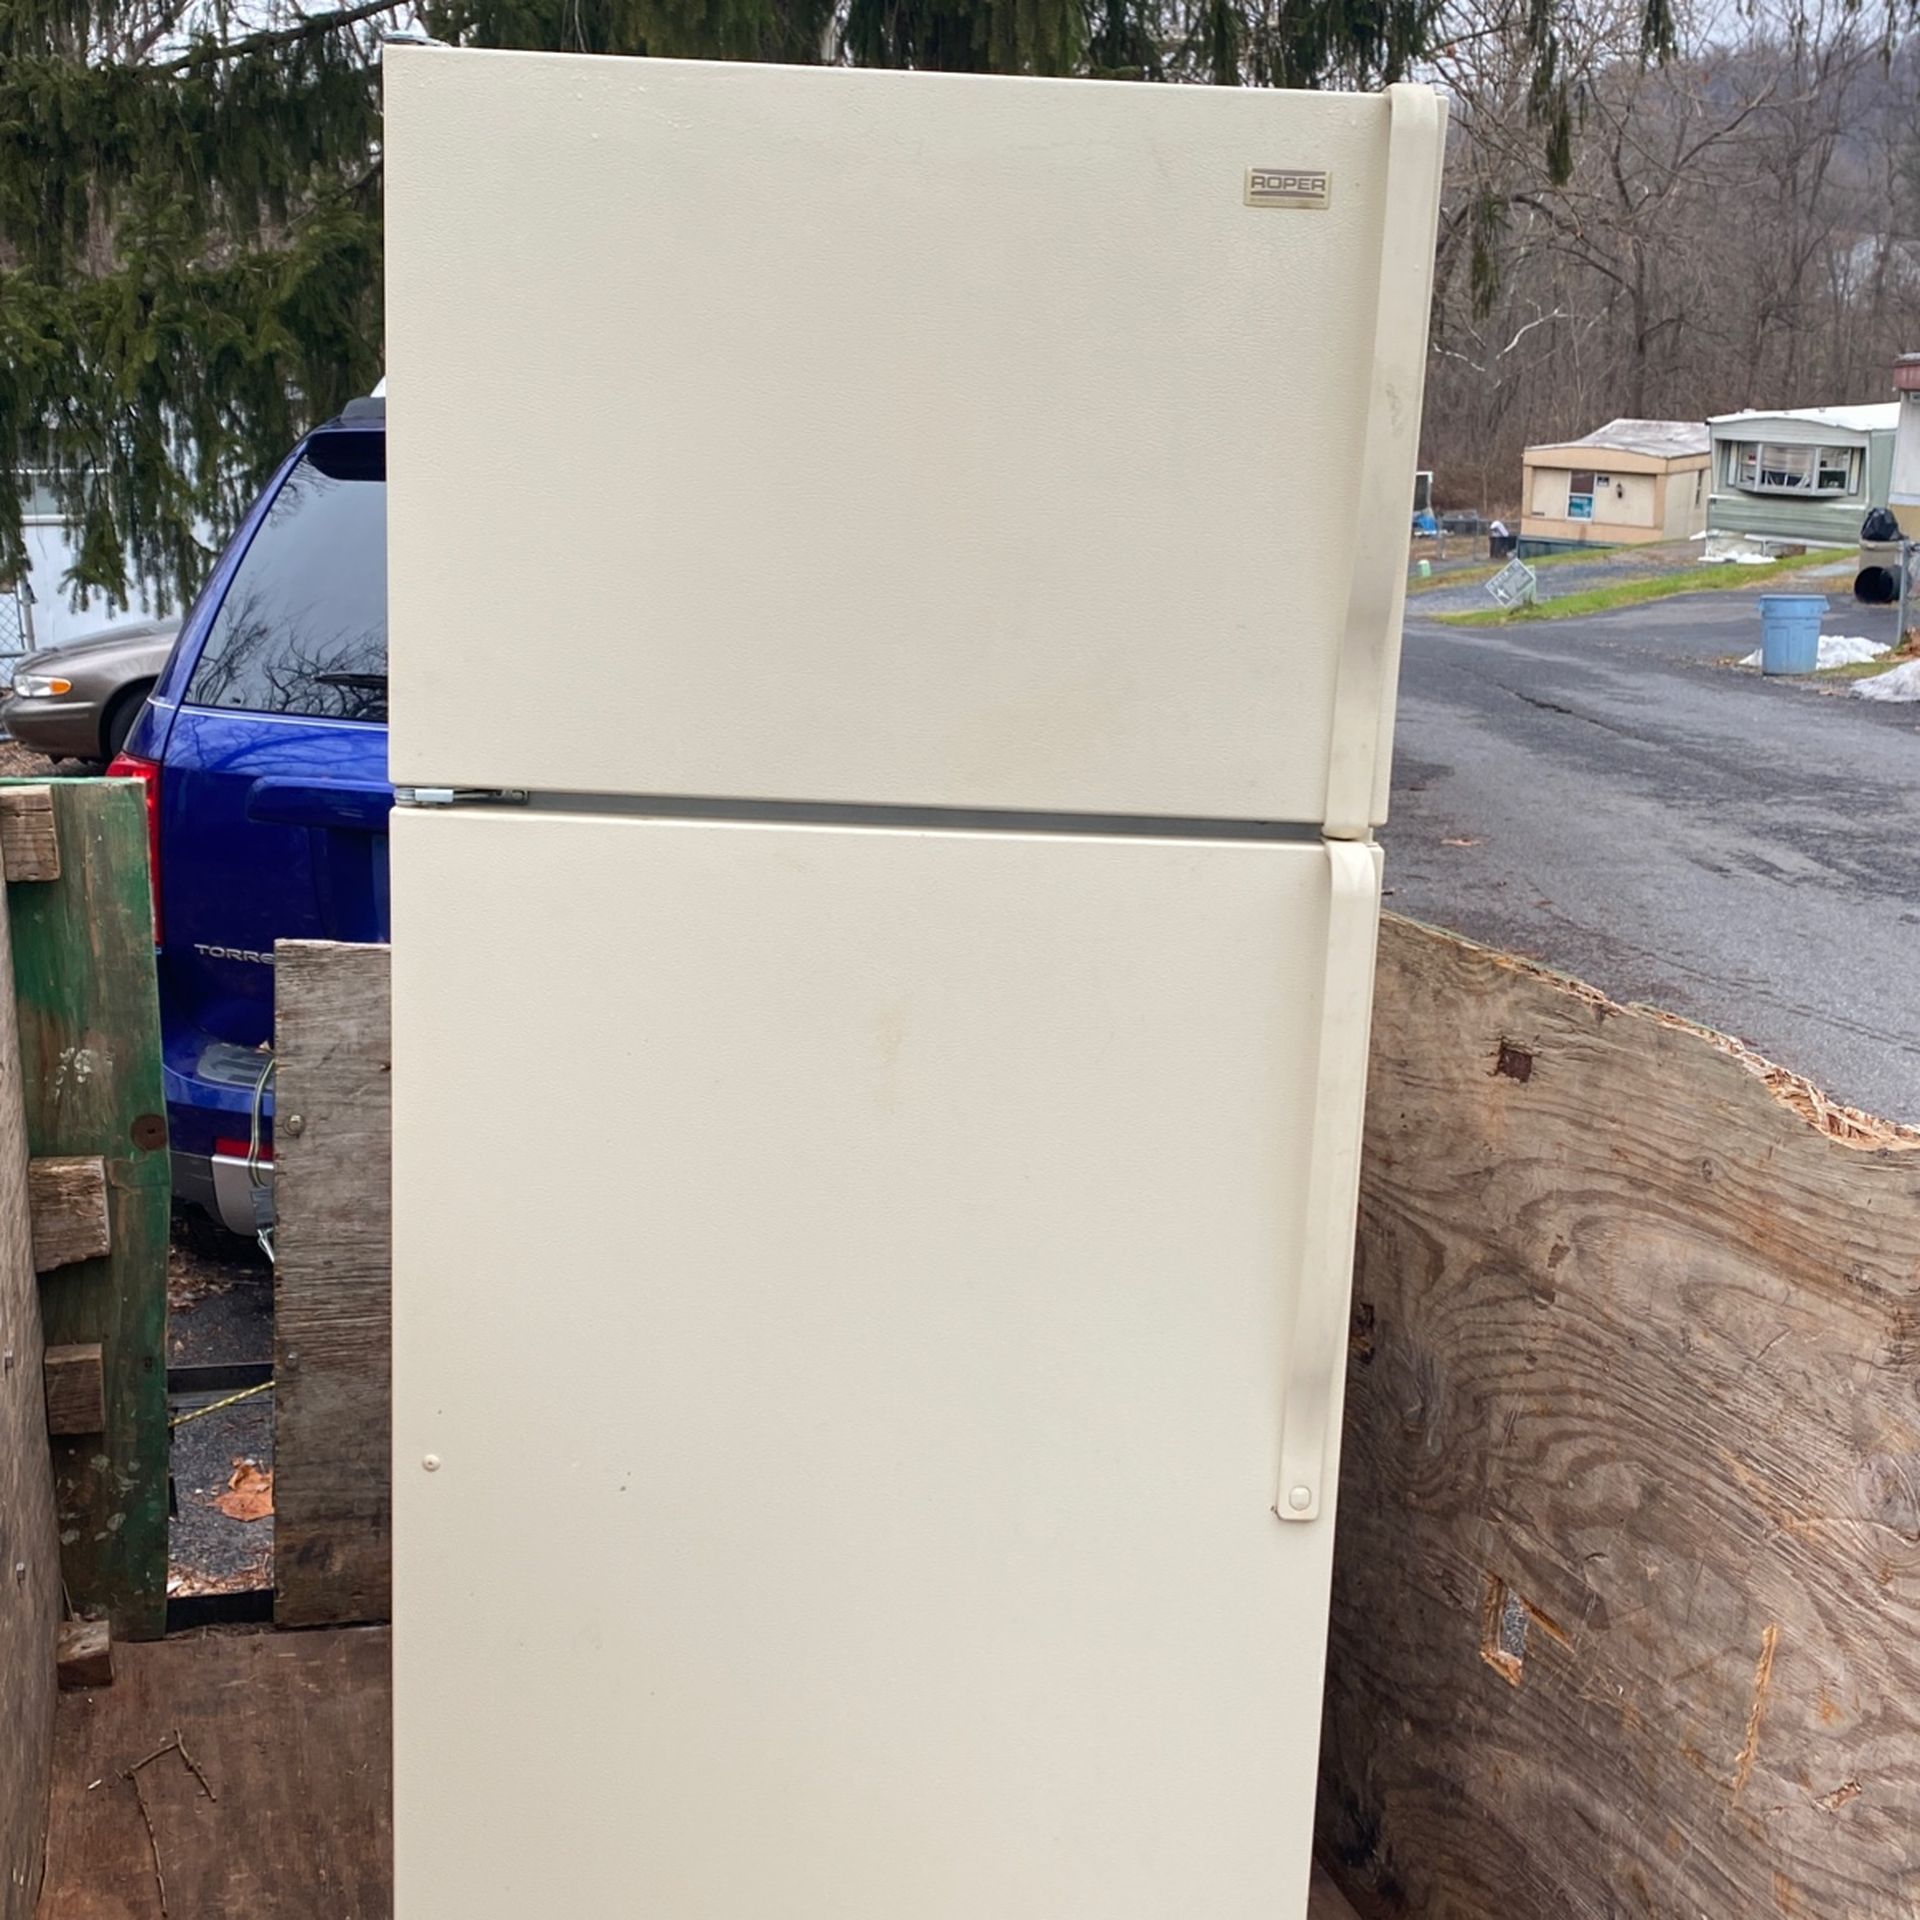 Roper fridge made by Whirlpool corporation